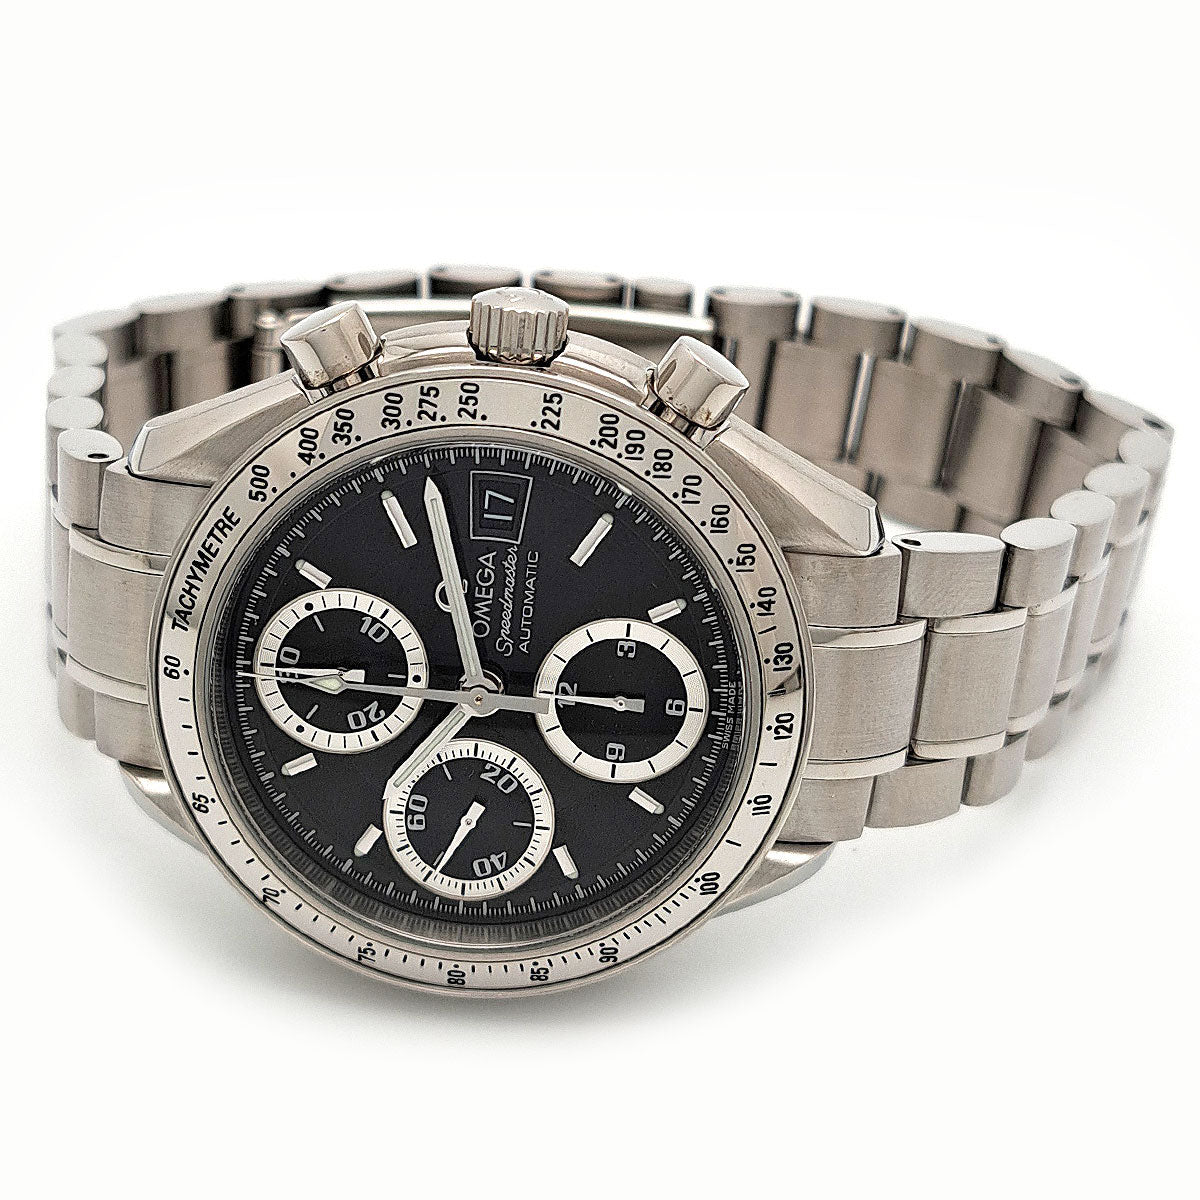 Automatic Speedmaster Wrist Watch 3513.56